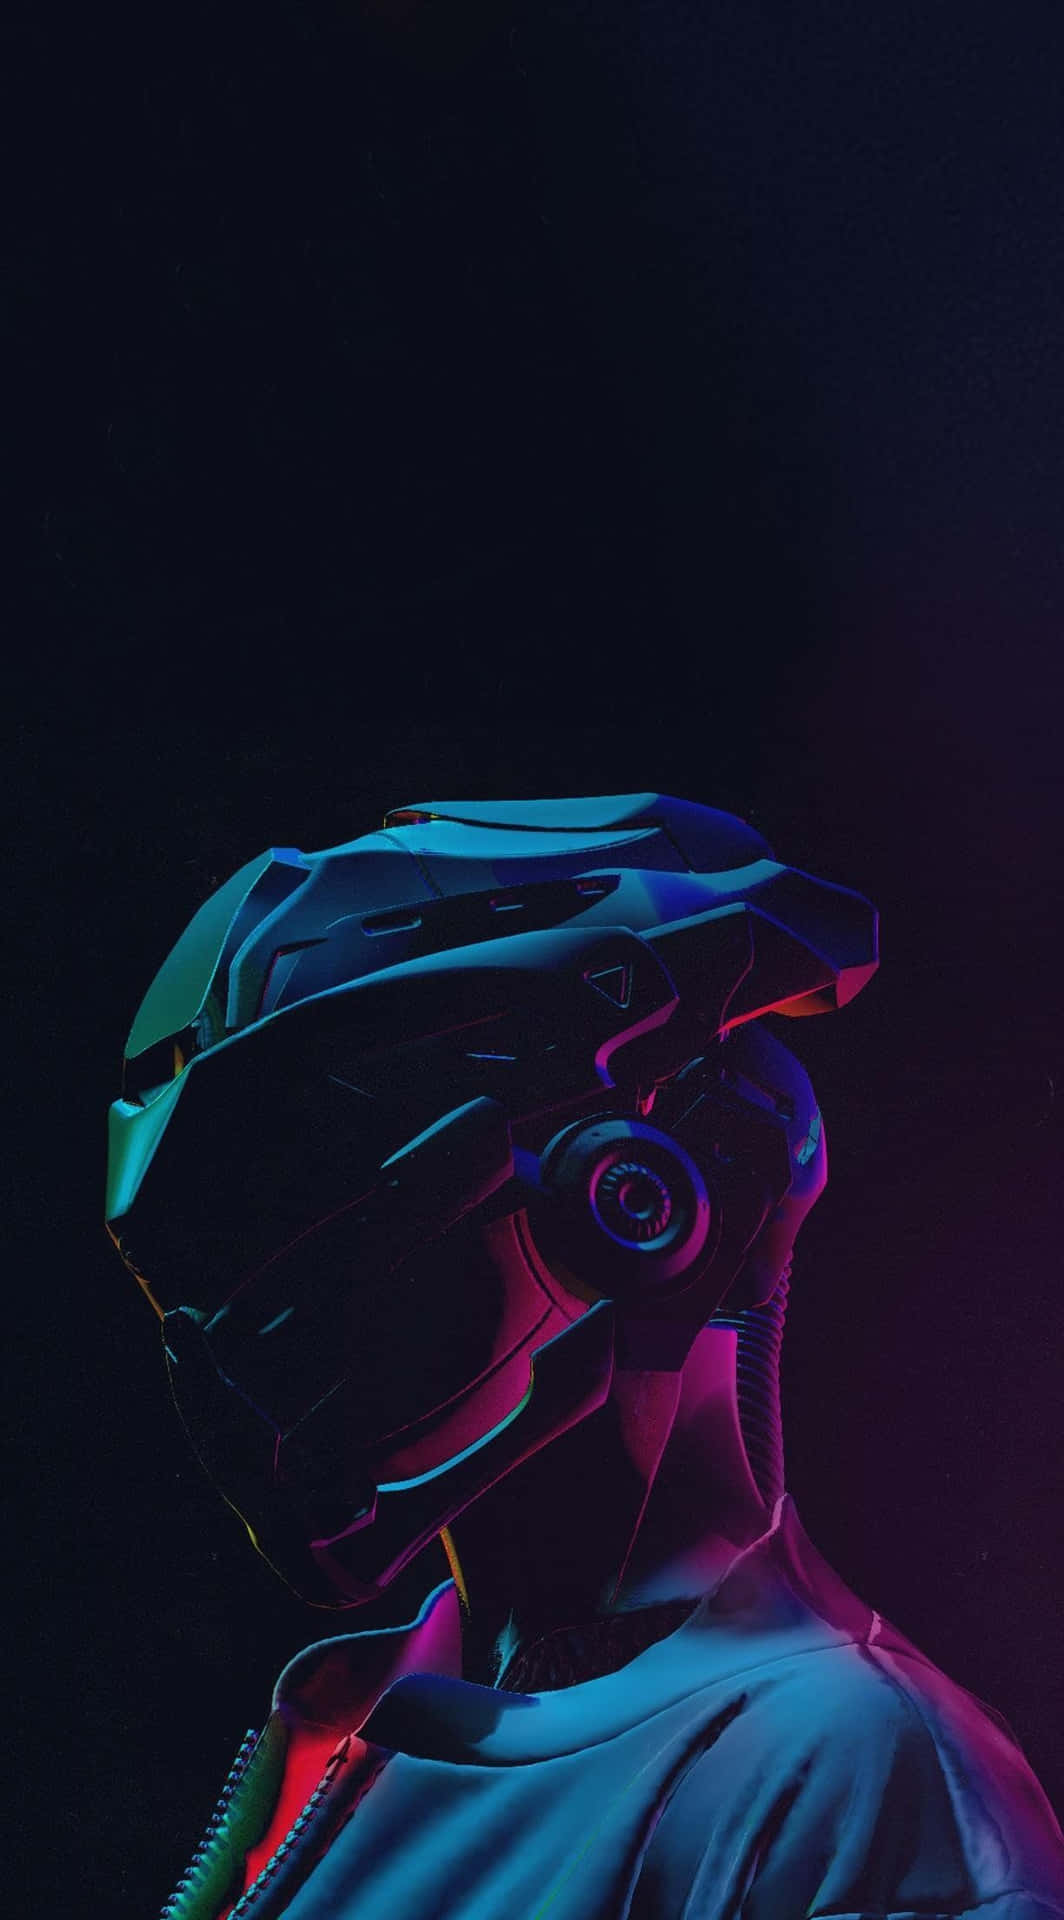 Sfondoiphone Xs Di Cyberpunk 2077 Con Robot Al Neon